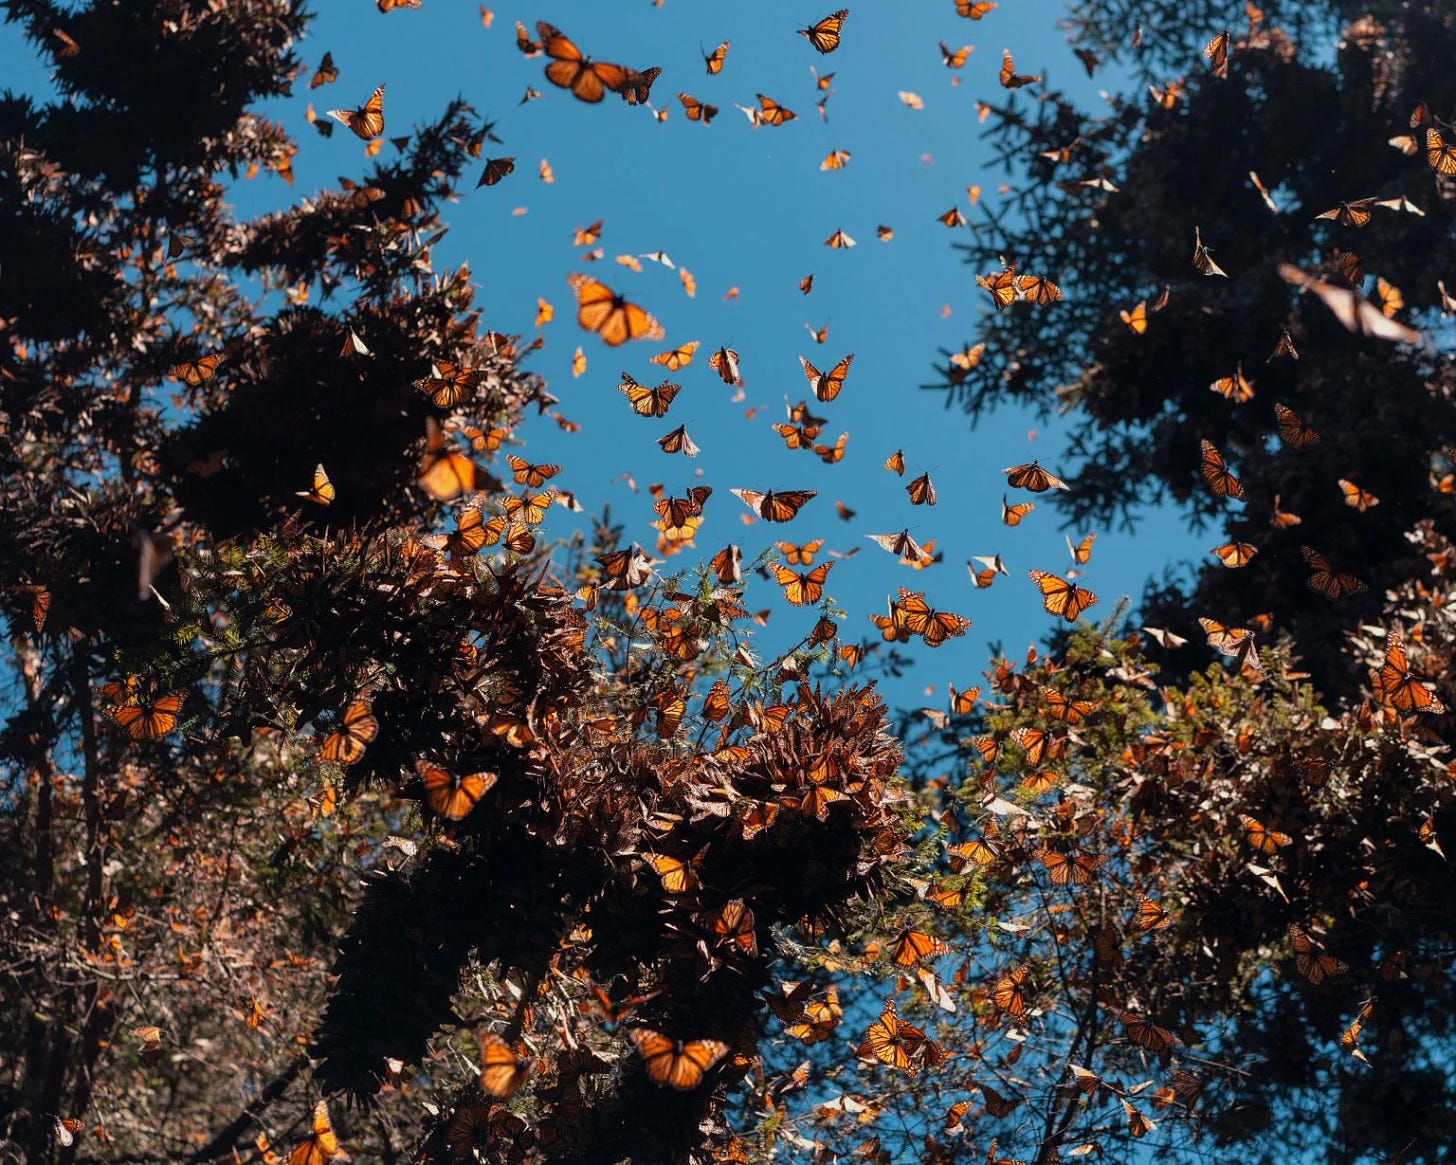 Monarch butterflies in orange and black flying